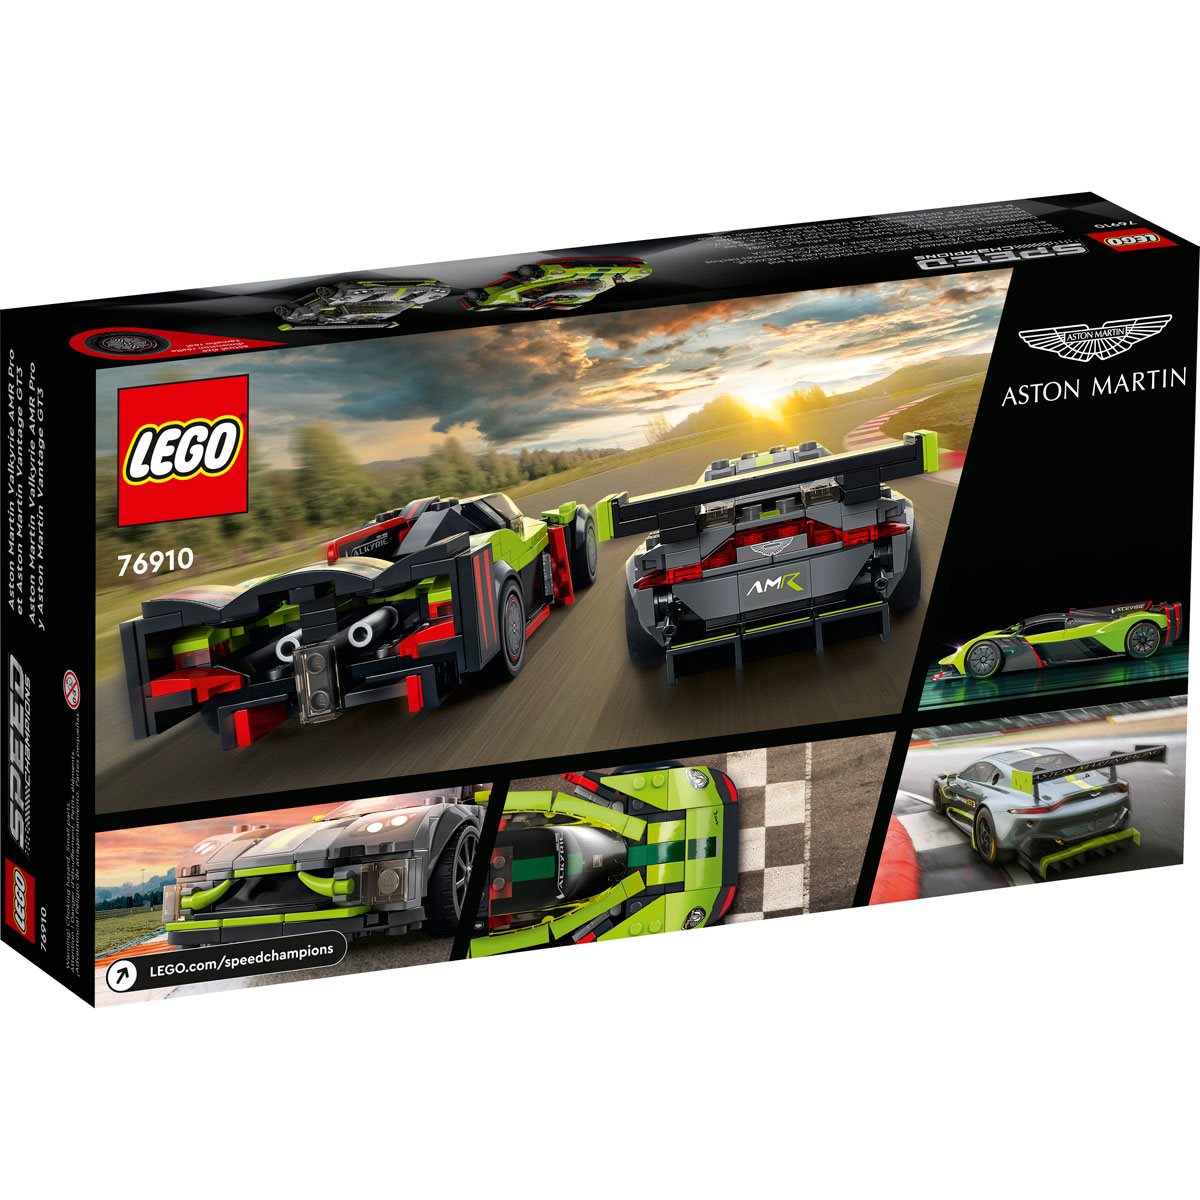 LEGO 76910 Speed Champions Aston Martin Valkyrie AMR and Aston Martin Vantage GT3